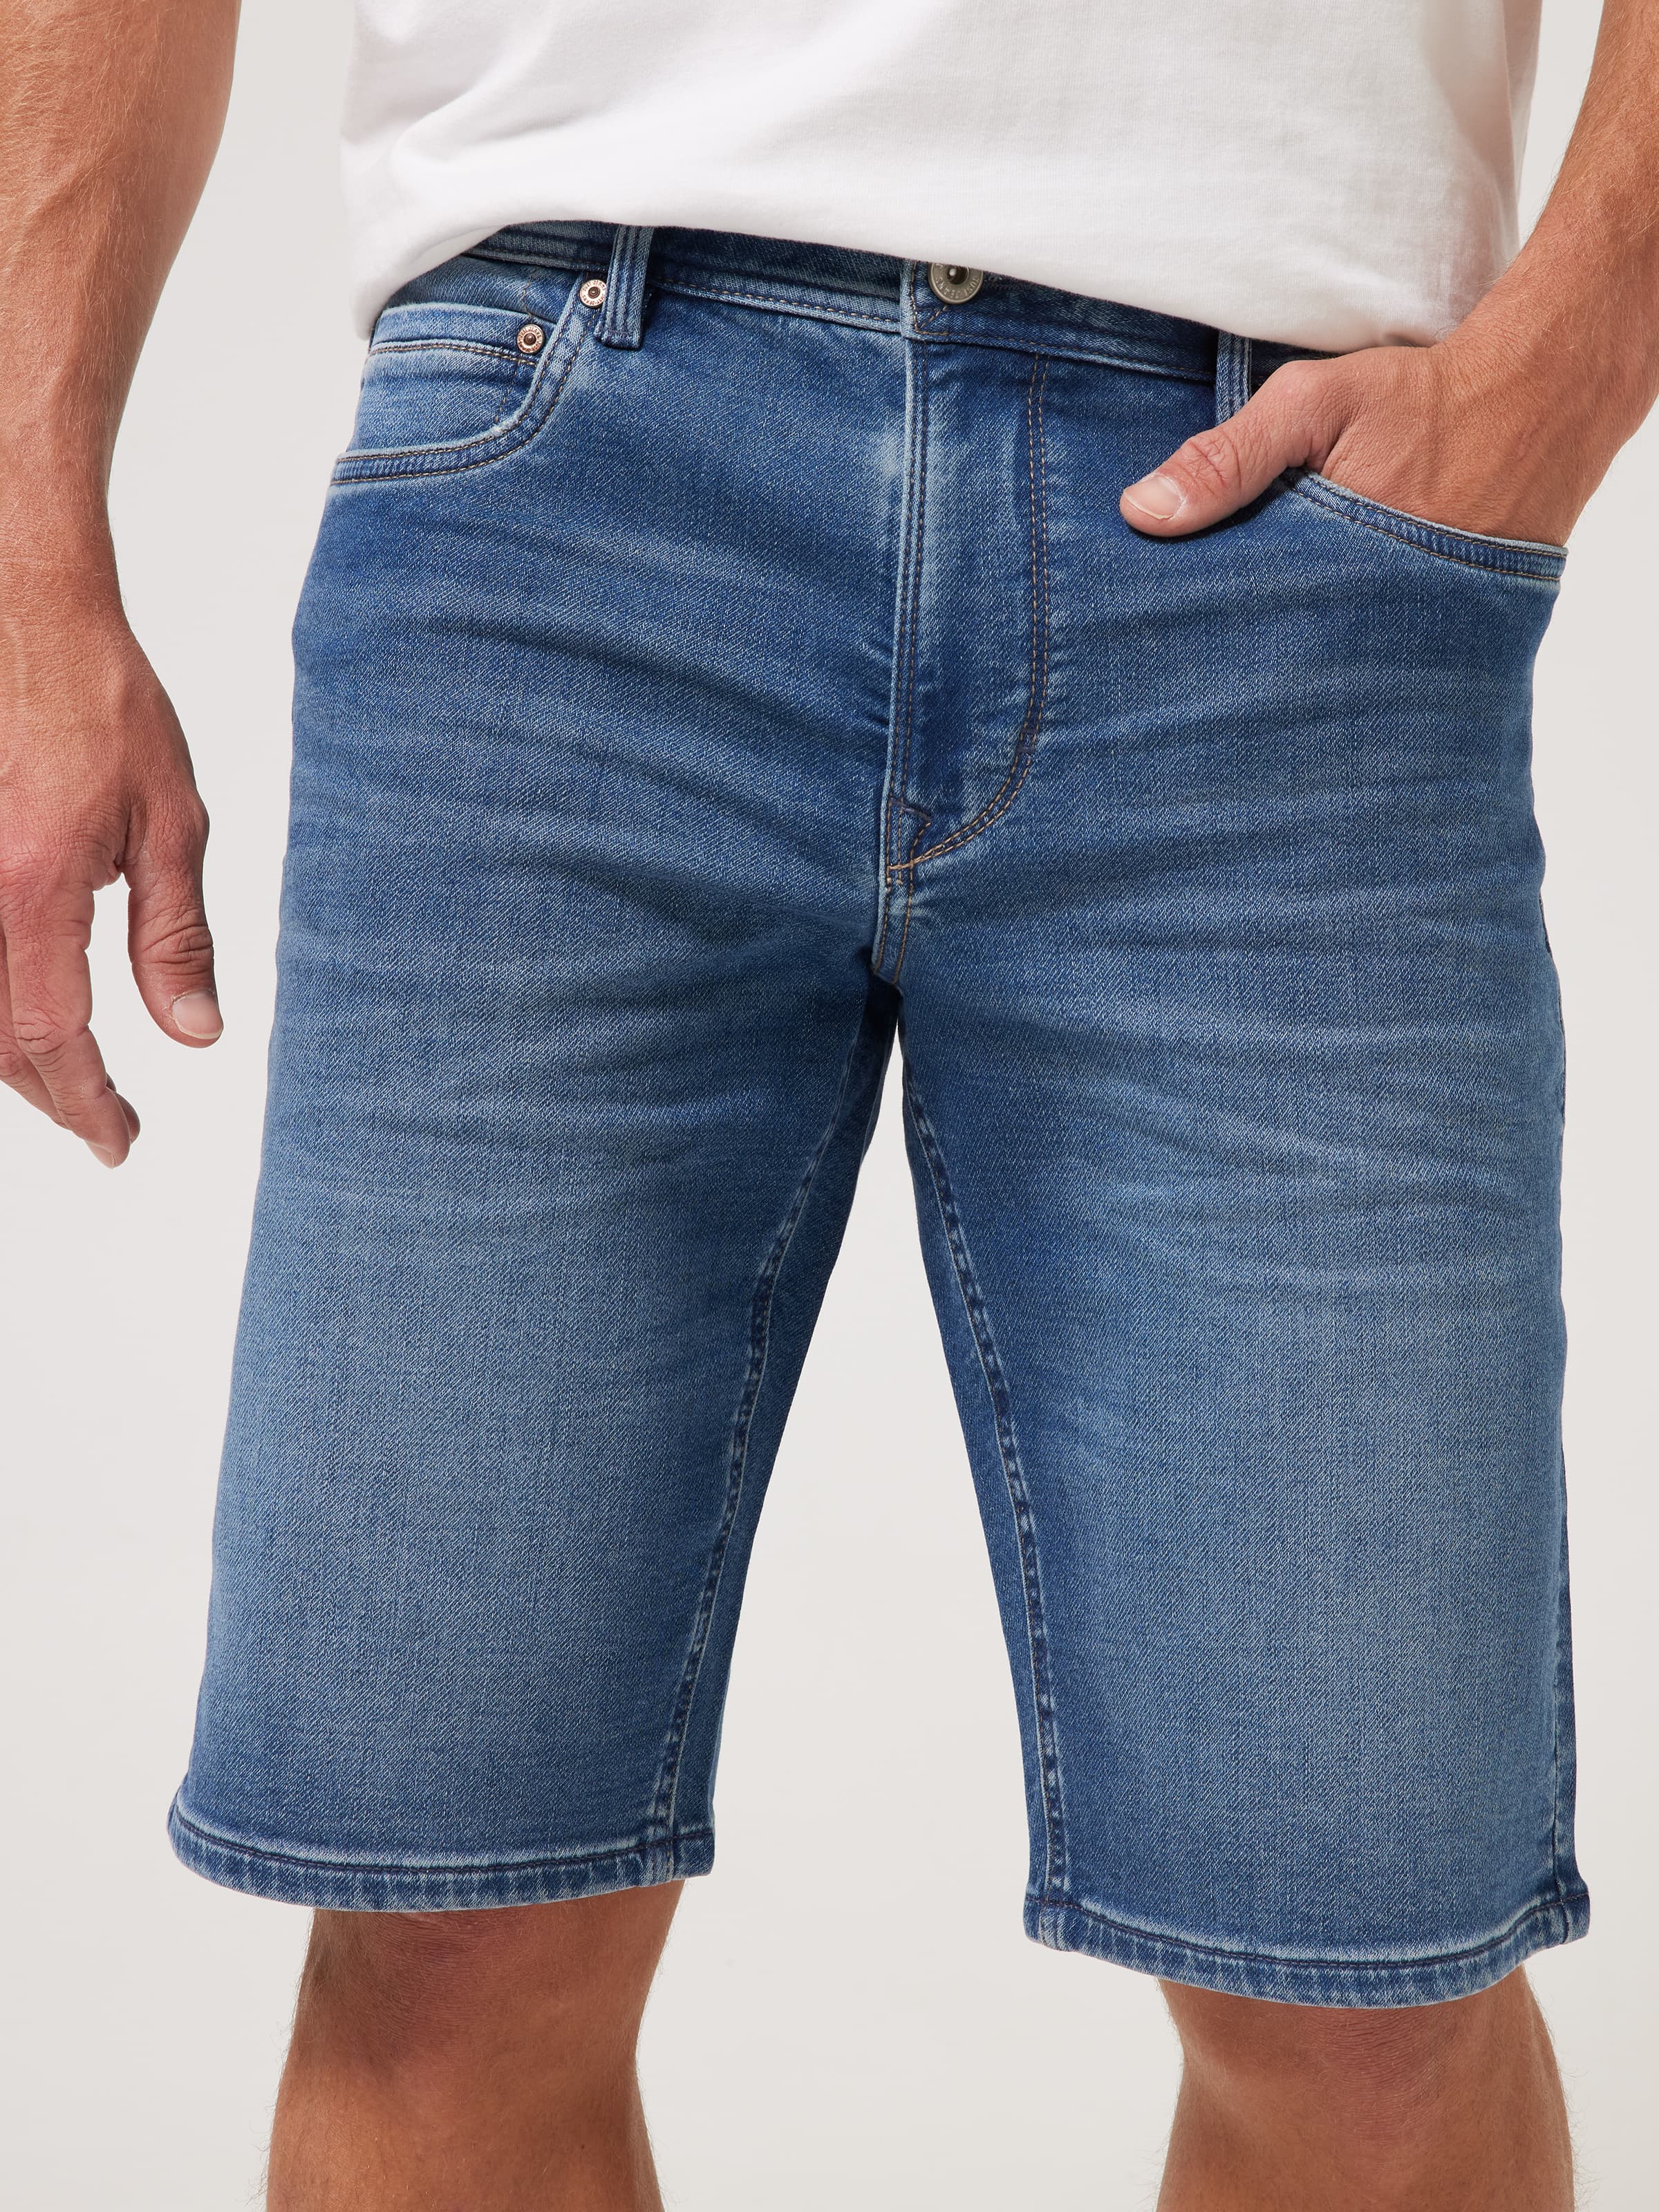 Men's Denim Shorts & Chino Shorts